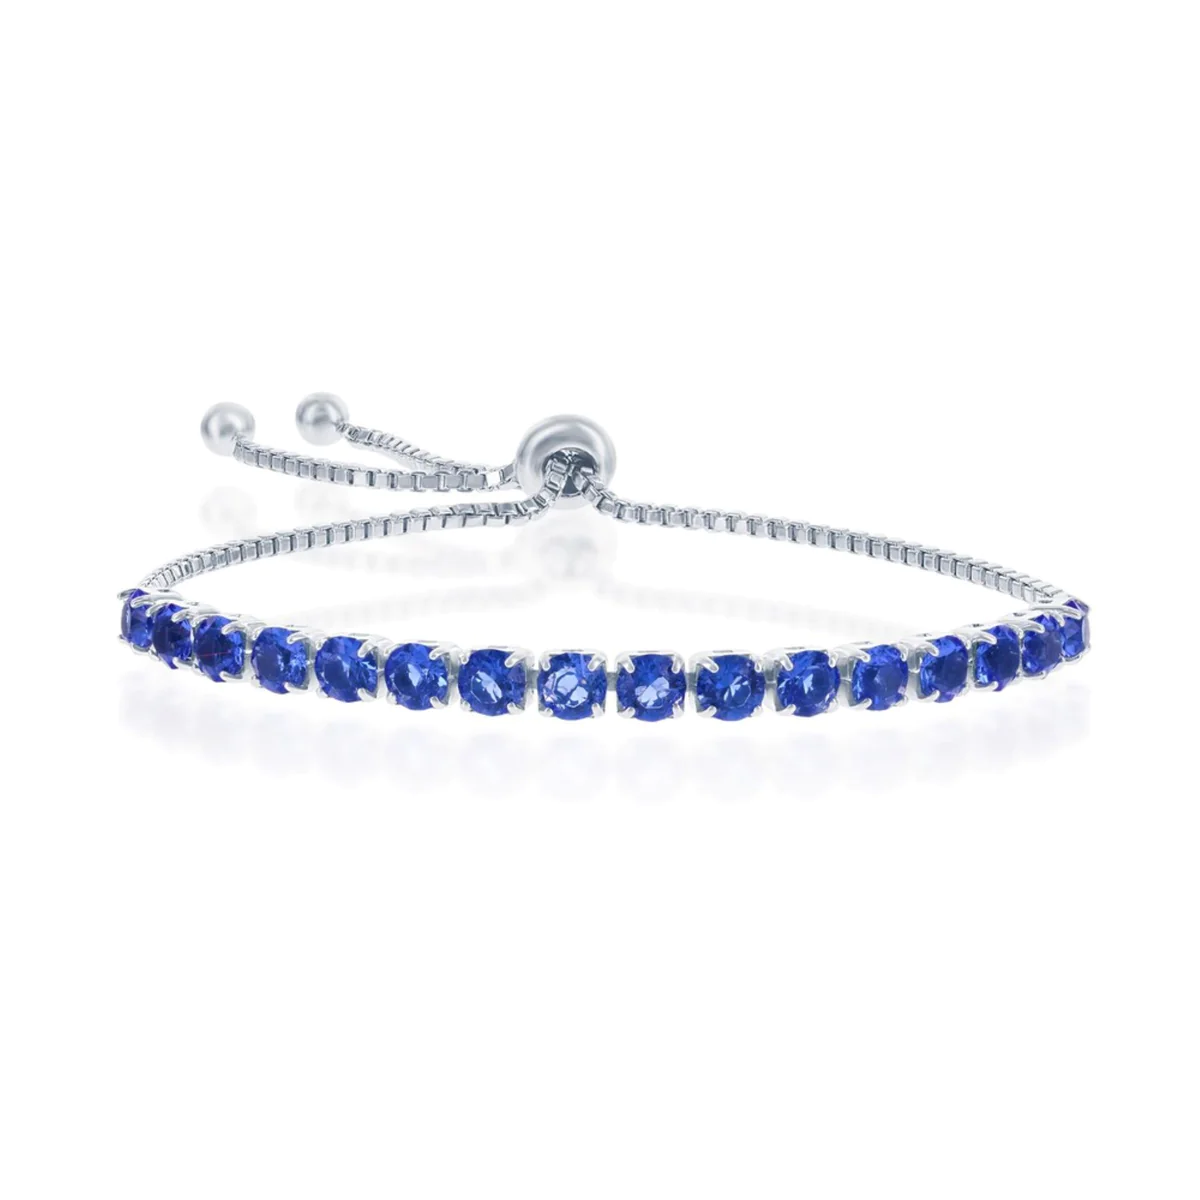 Signature Adjustable Bolo Bracelet in Blue Sapphire